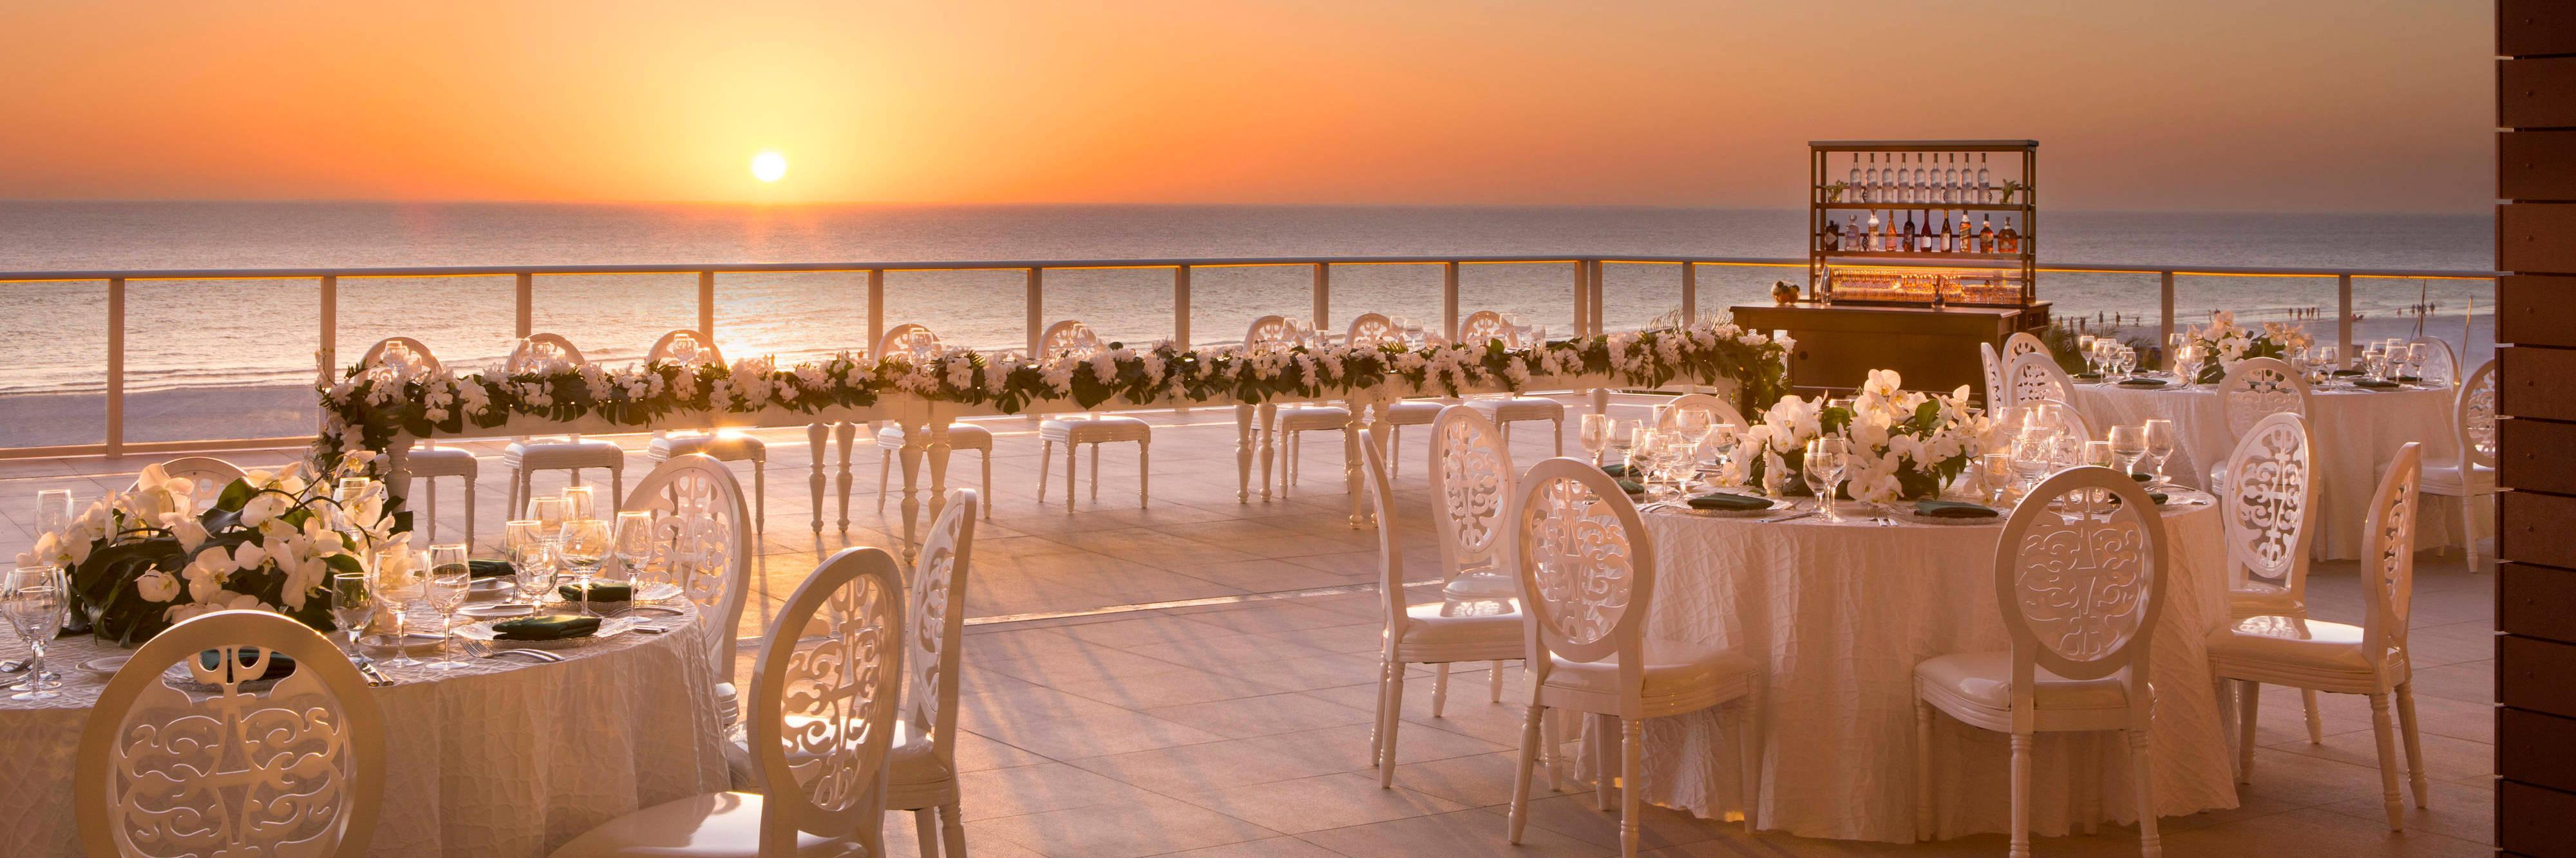 Terrace wedding reception at sunset